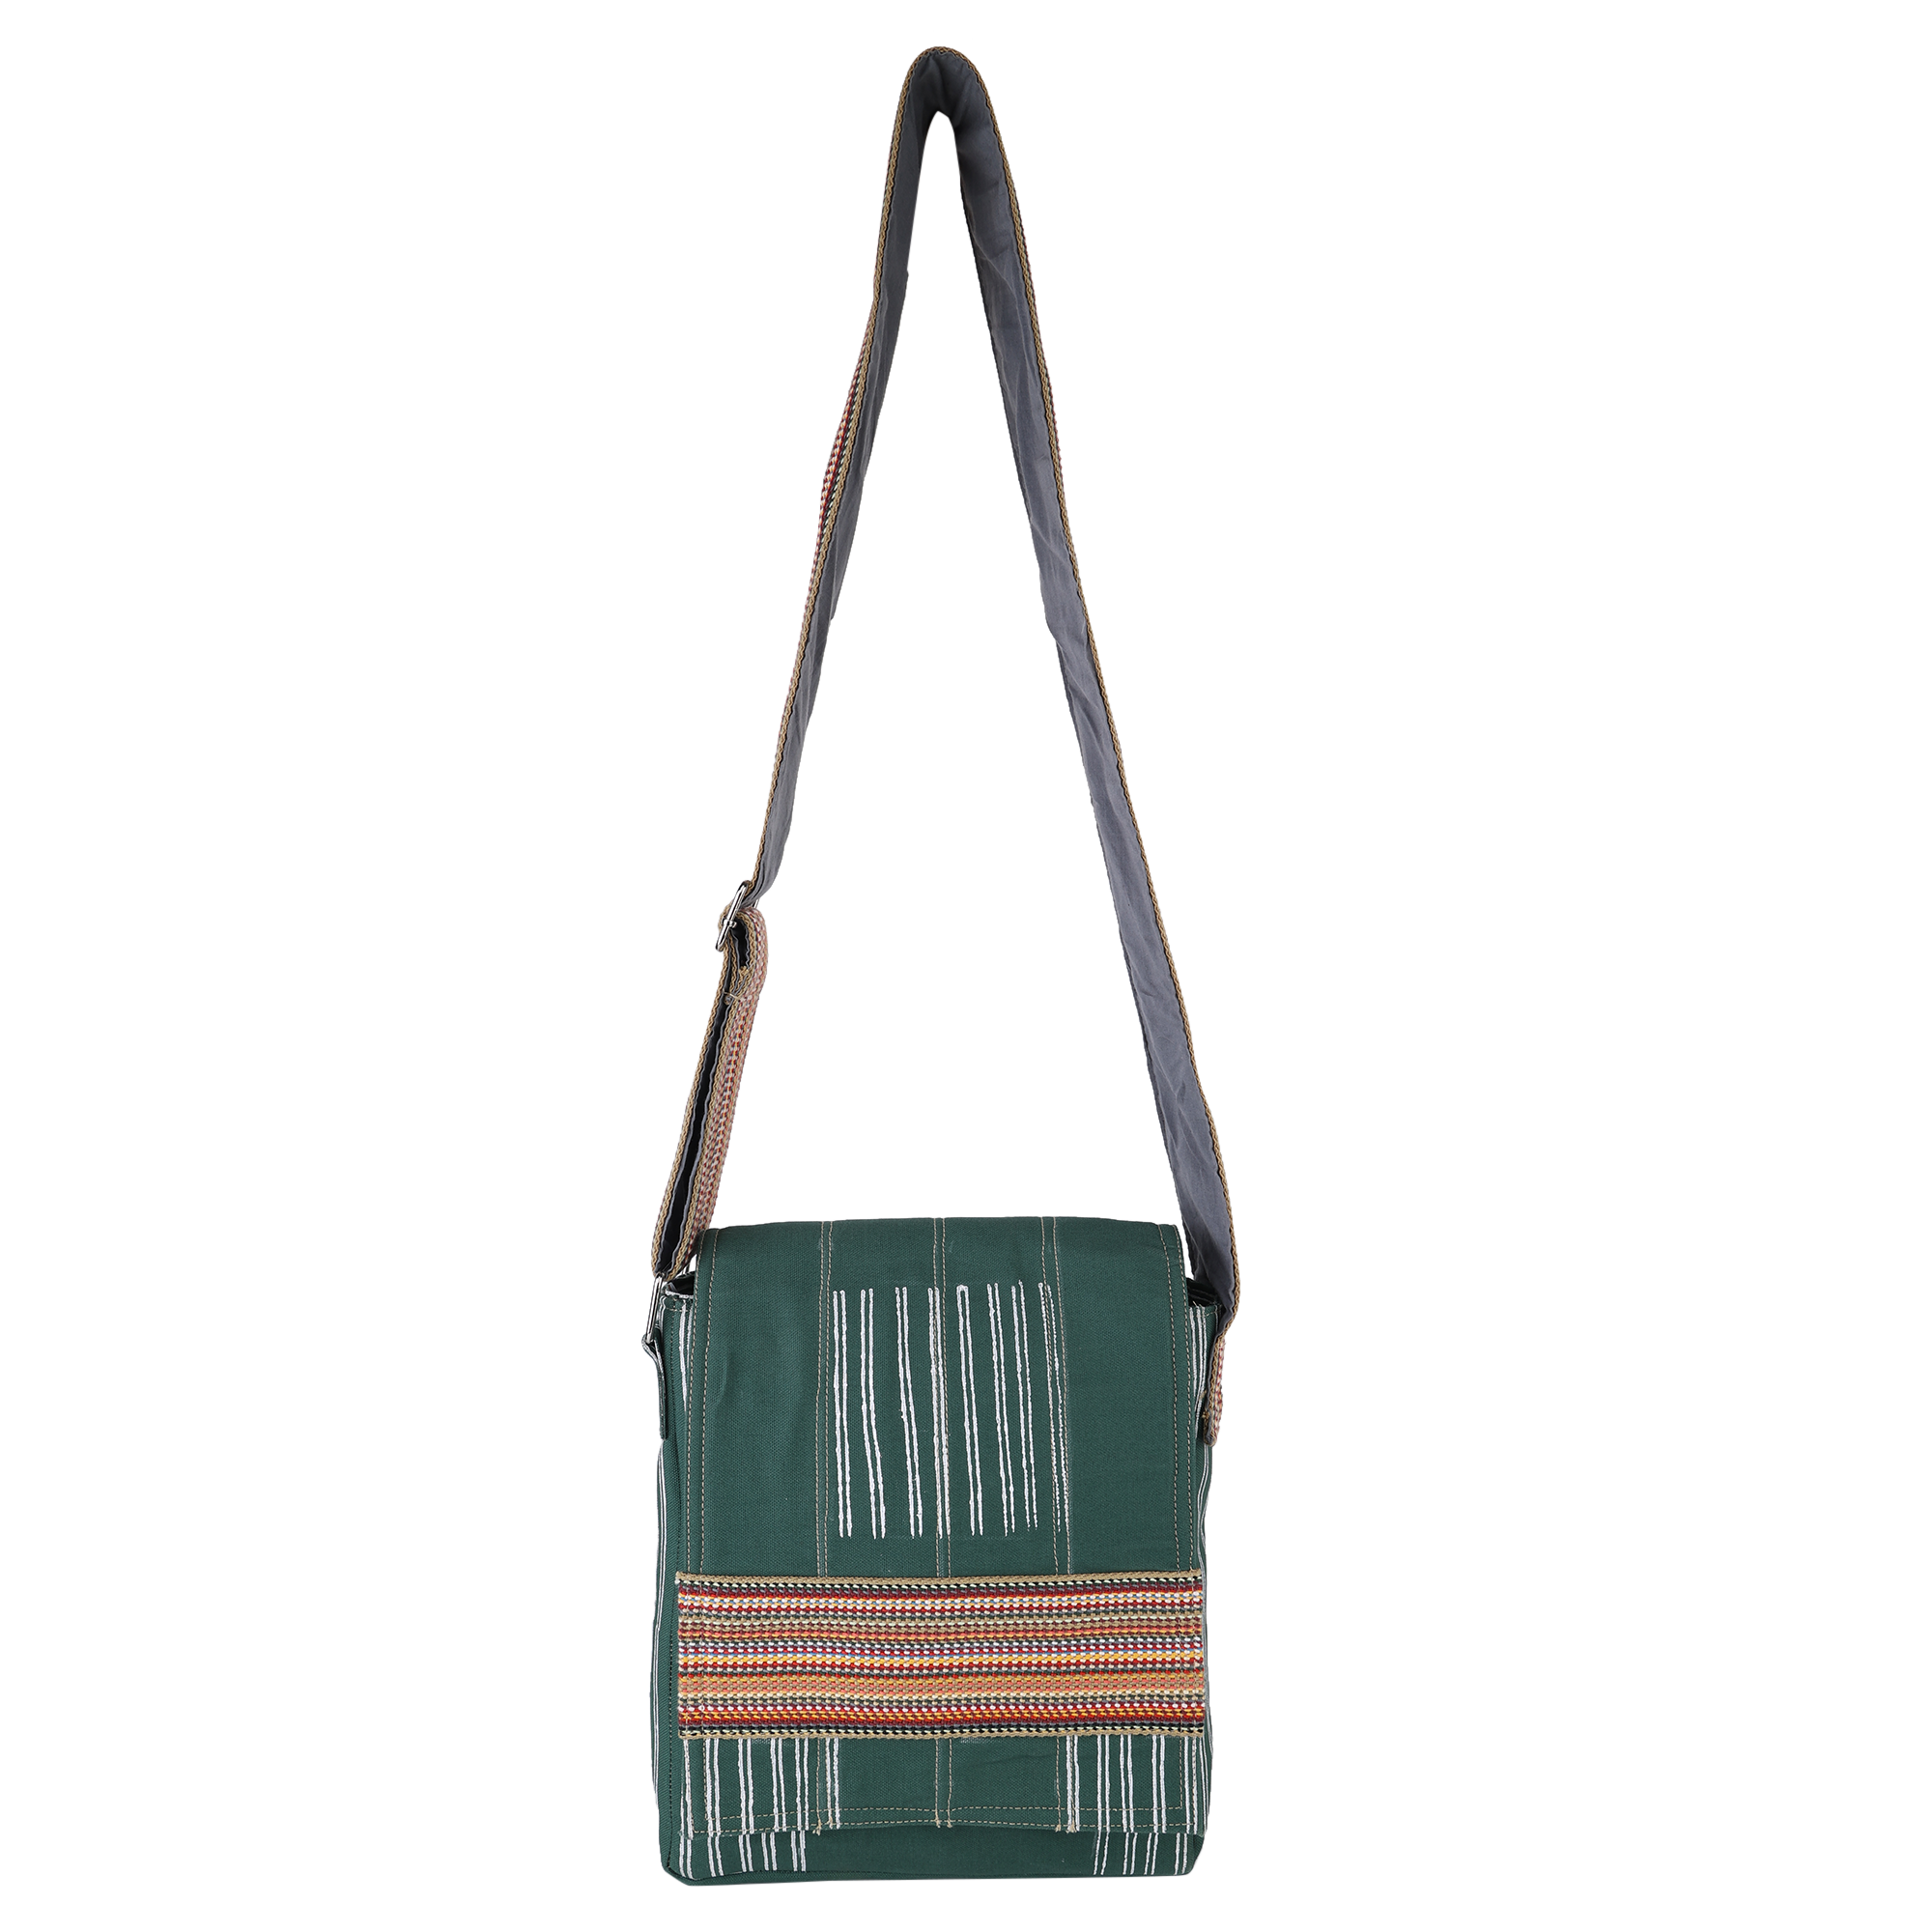 SHAMRIZ Women Sling Bag With Adjustable strap | handbag | purse |Side Sling  bag | Tassel Sling Bag (PinkA) : Amazon.in: Fashion